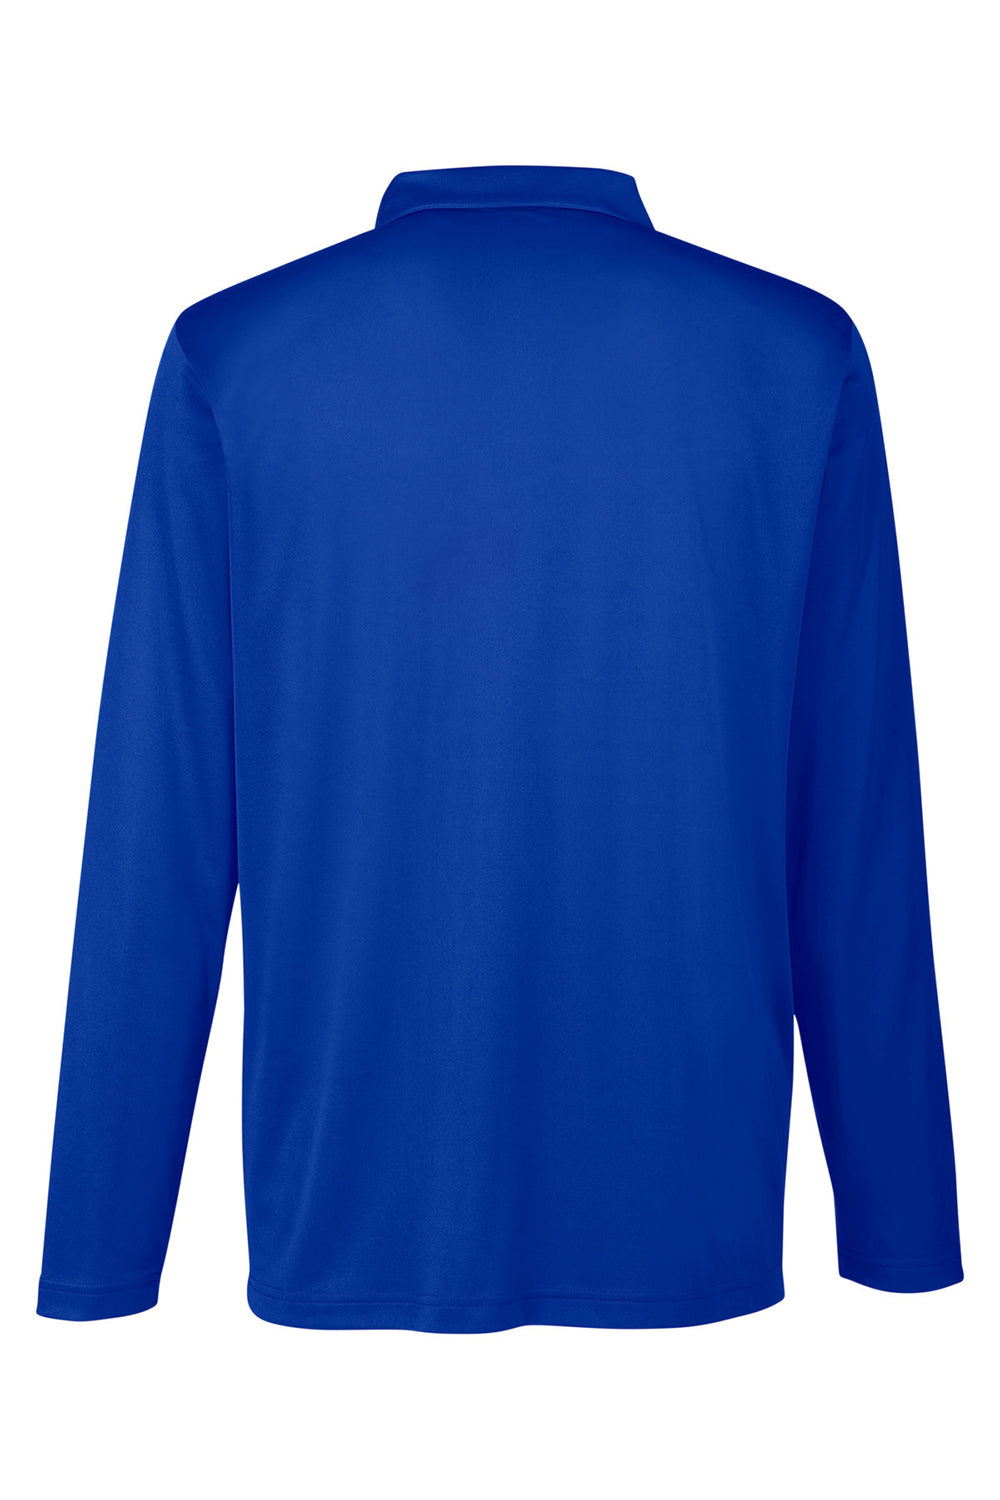 Team 365 TT51L Mens Zone Sonic Moisture Wicking Long Sleeve Polo Shirt Royal Blue Flat Back